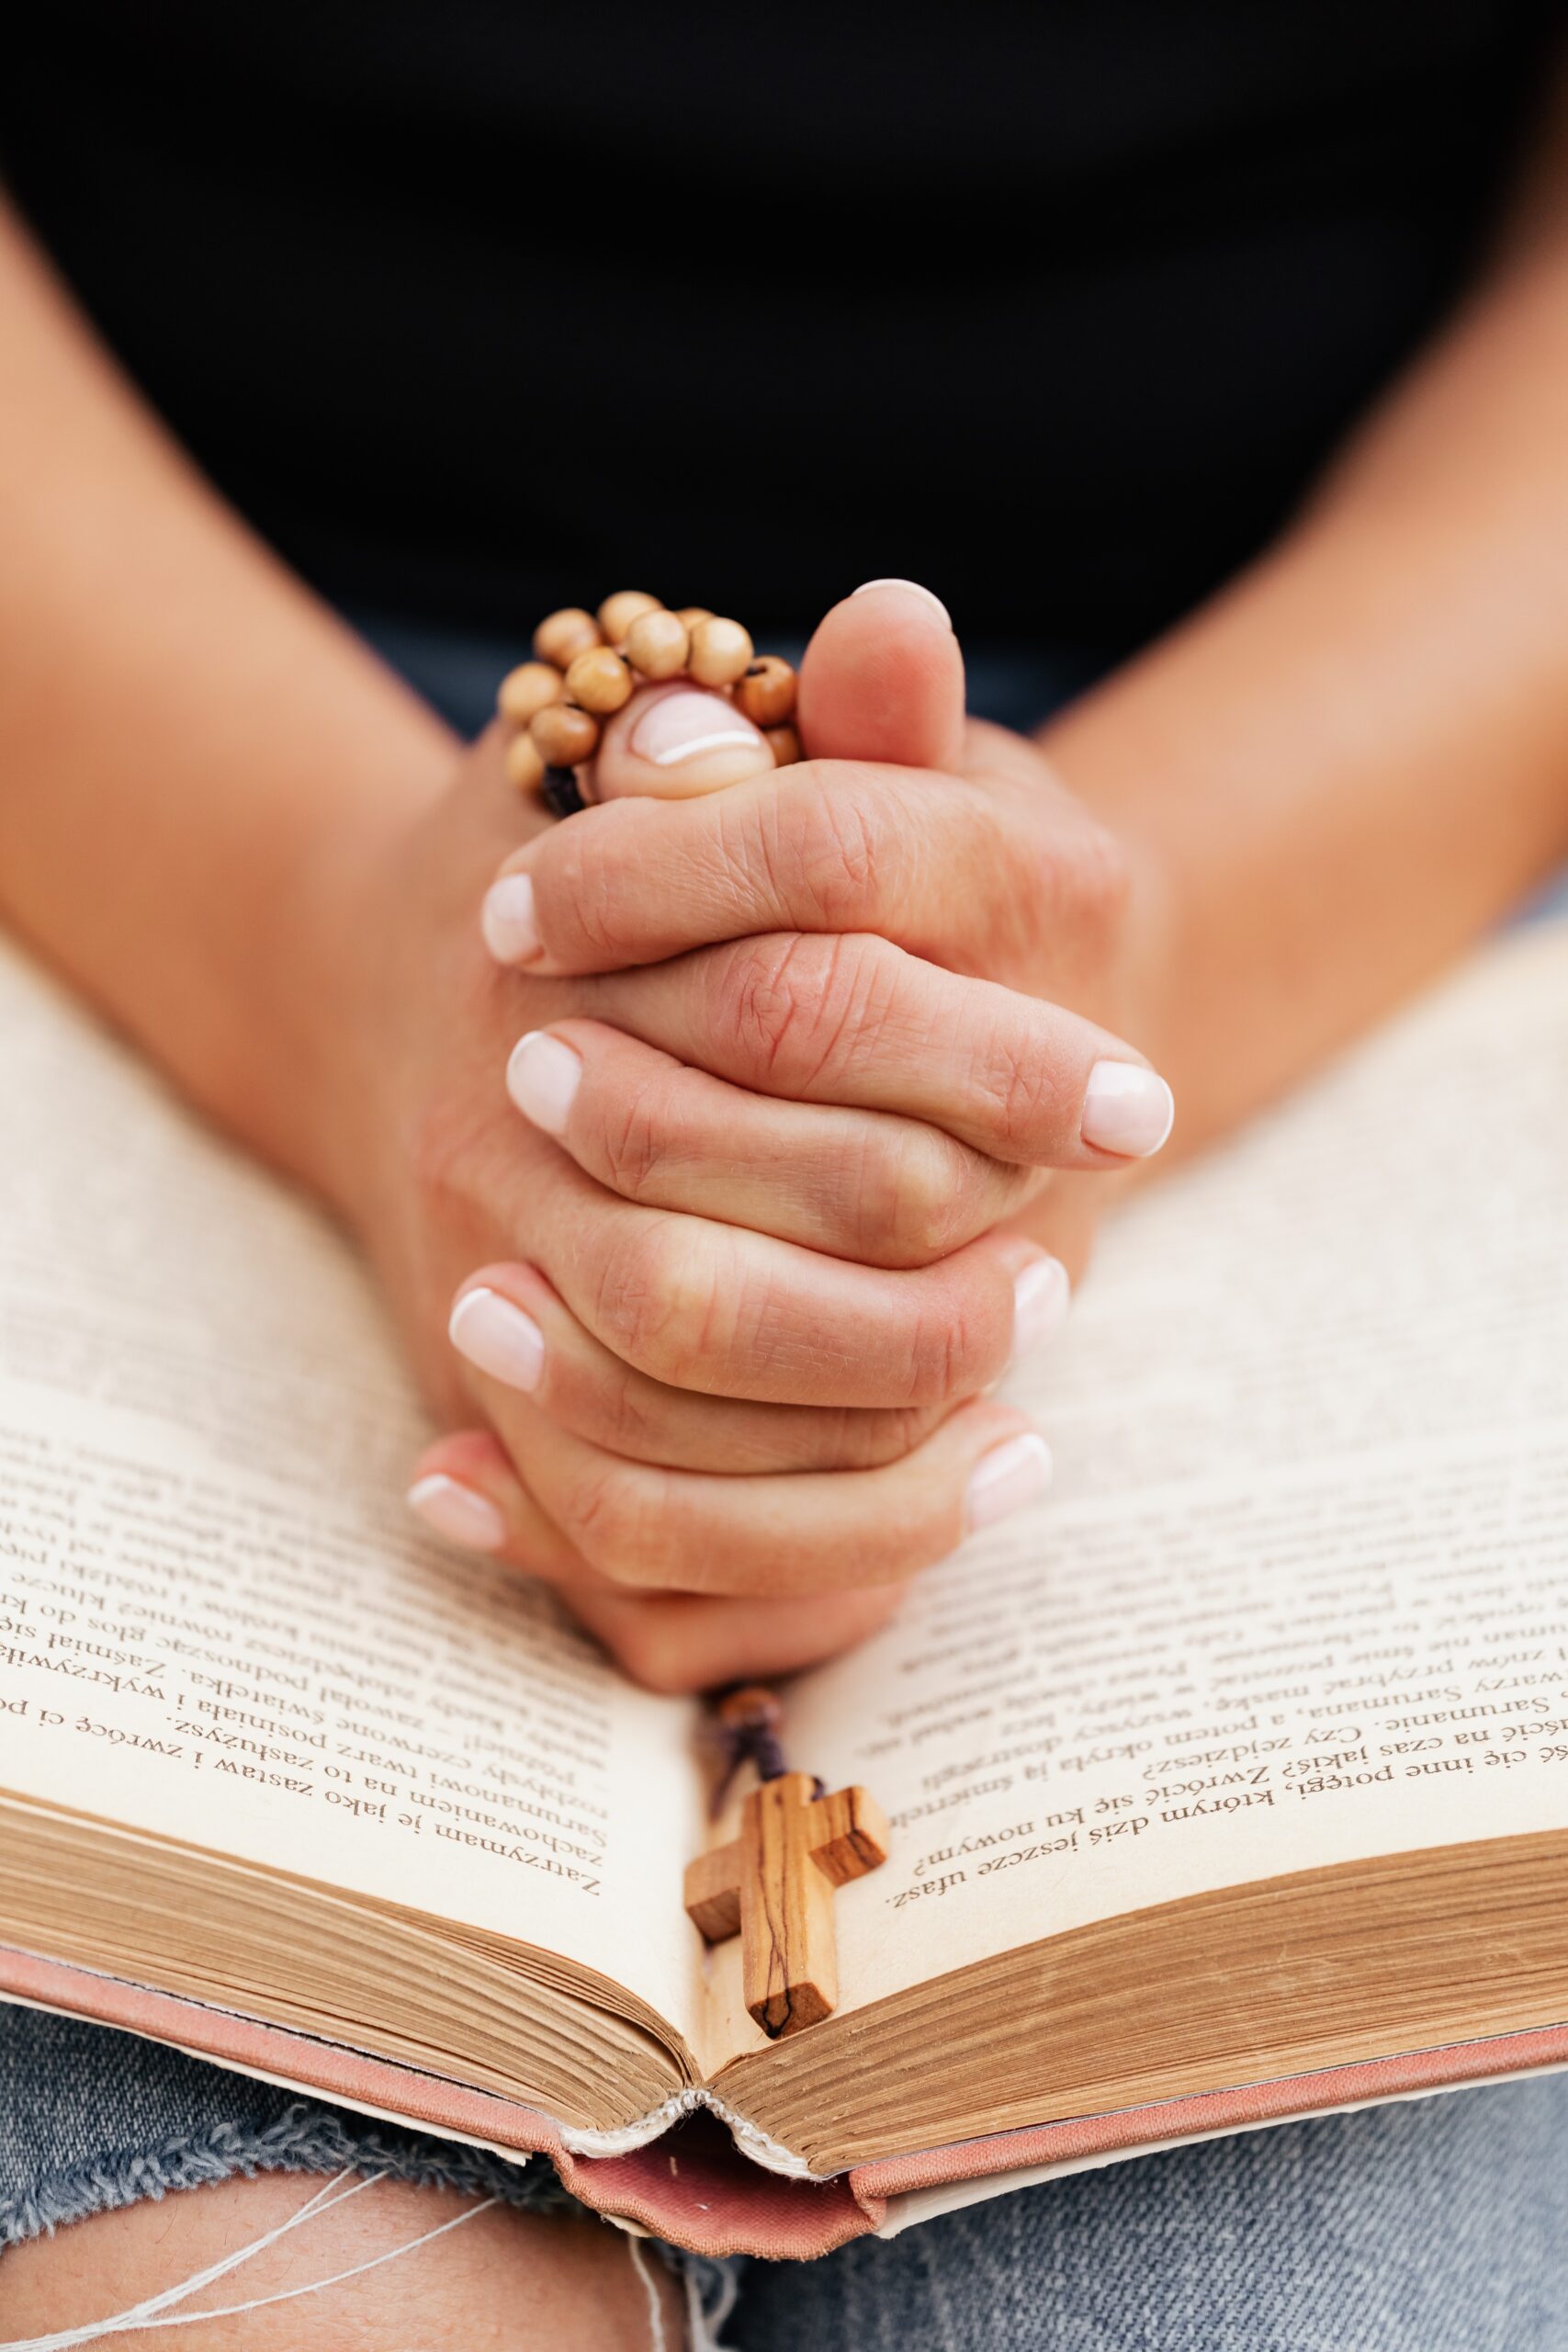 religious / scrupulosity OCD - praying hands